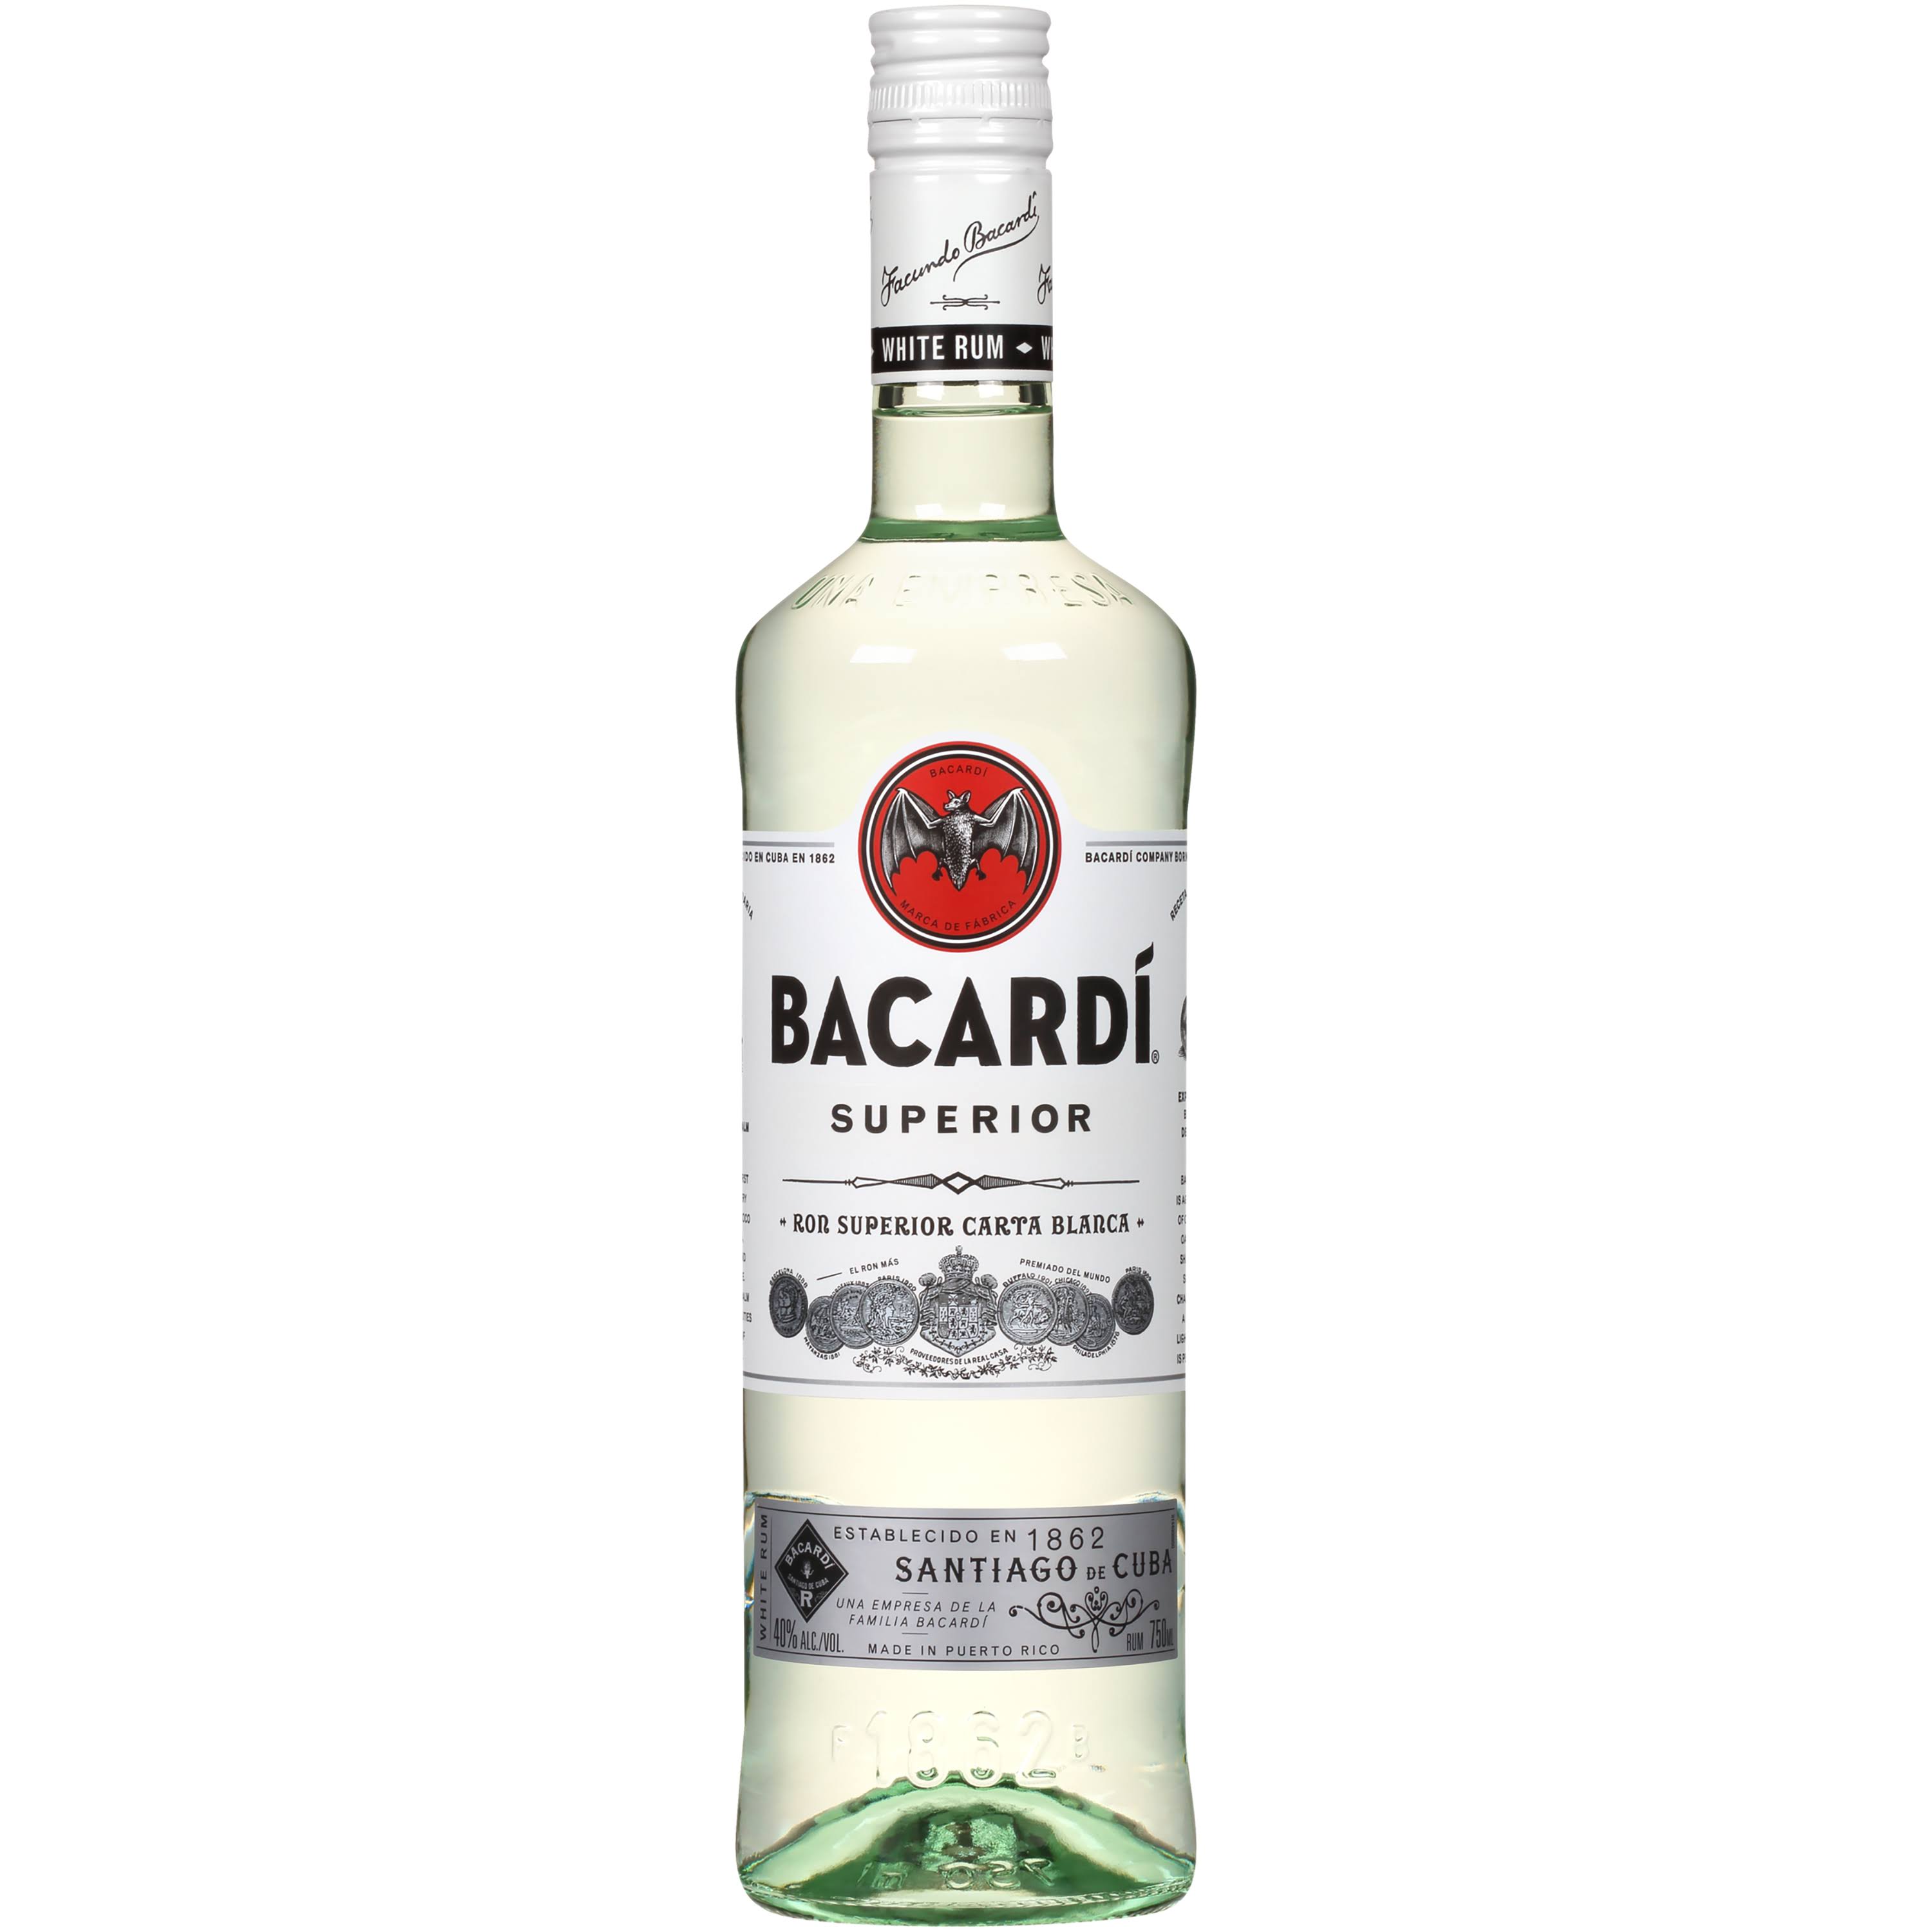 Bacardi Superior Rum, White, Grapefruit - 2 bottles